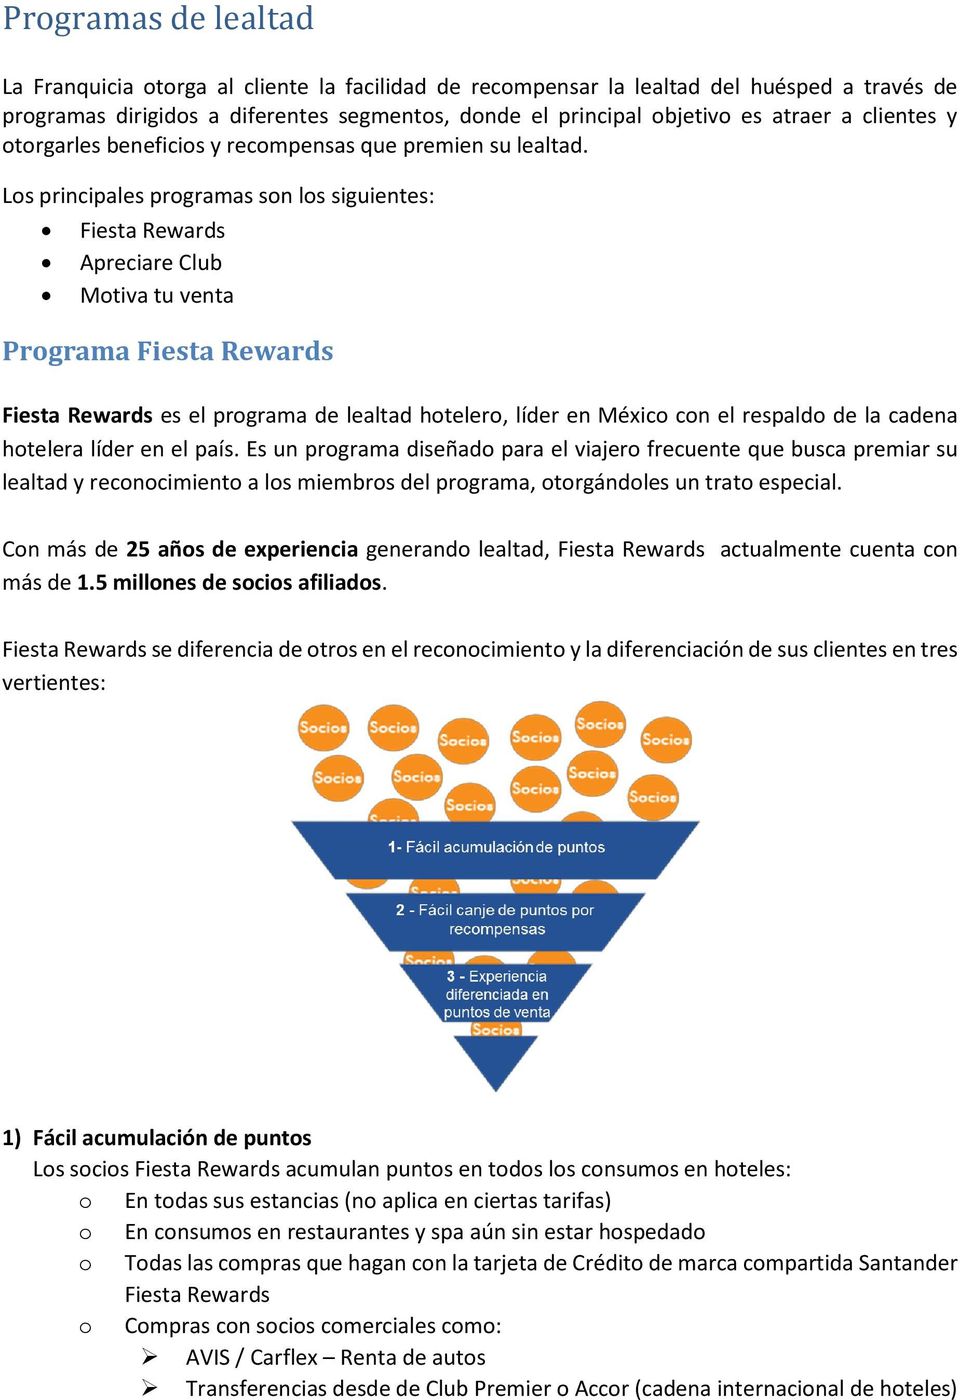 Grupo Posadas. Programas de Lealtad. Fiesta Rewards, Motiva y Apreciare -  PDF Free Download